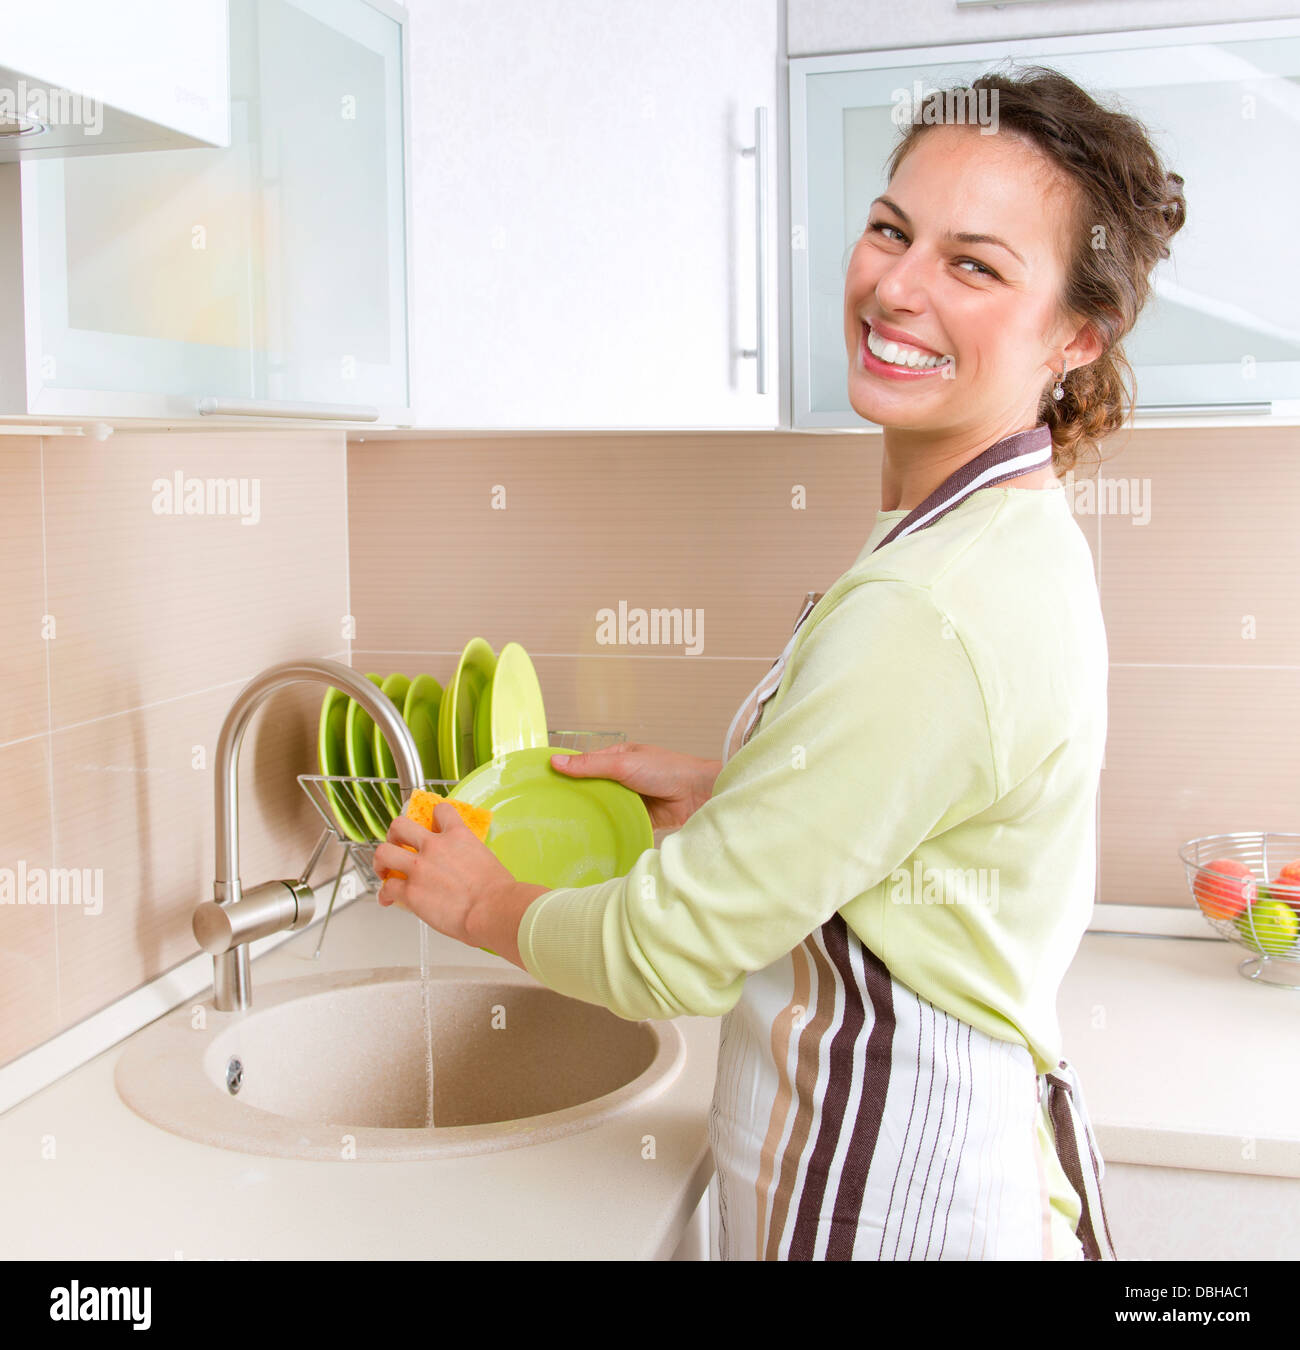 https://c8.alamy.com/comp/DBHAC1/dishwashing-happy-young-woman-washing-dishes-DBHAC1.jpg